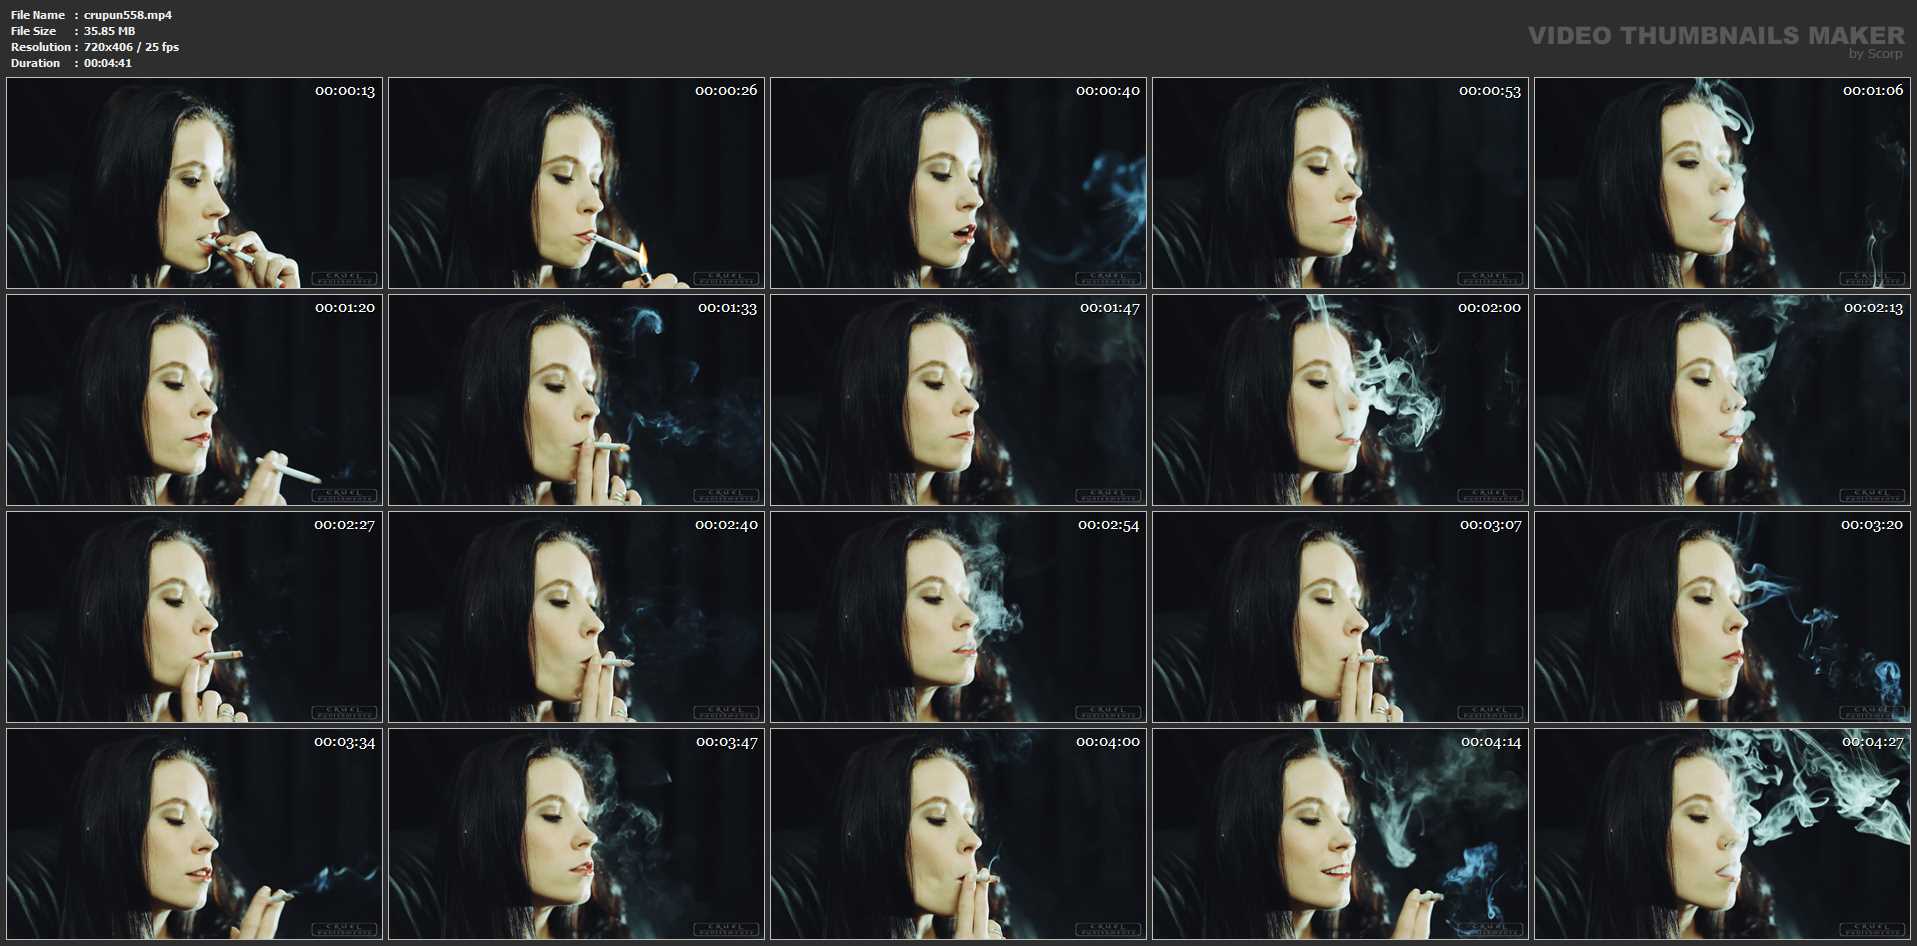 Mistress Anette - Lips and smoke - CRUEL PUNISHMENTS - SEVERE FEMDOM - SD/406p/MP4